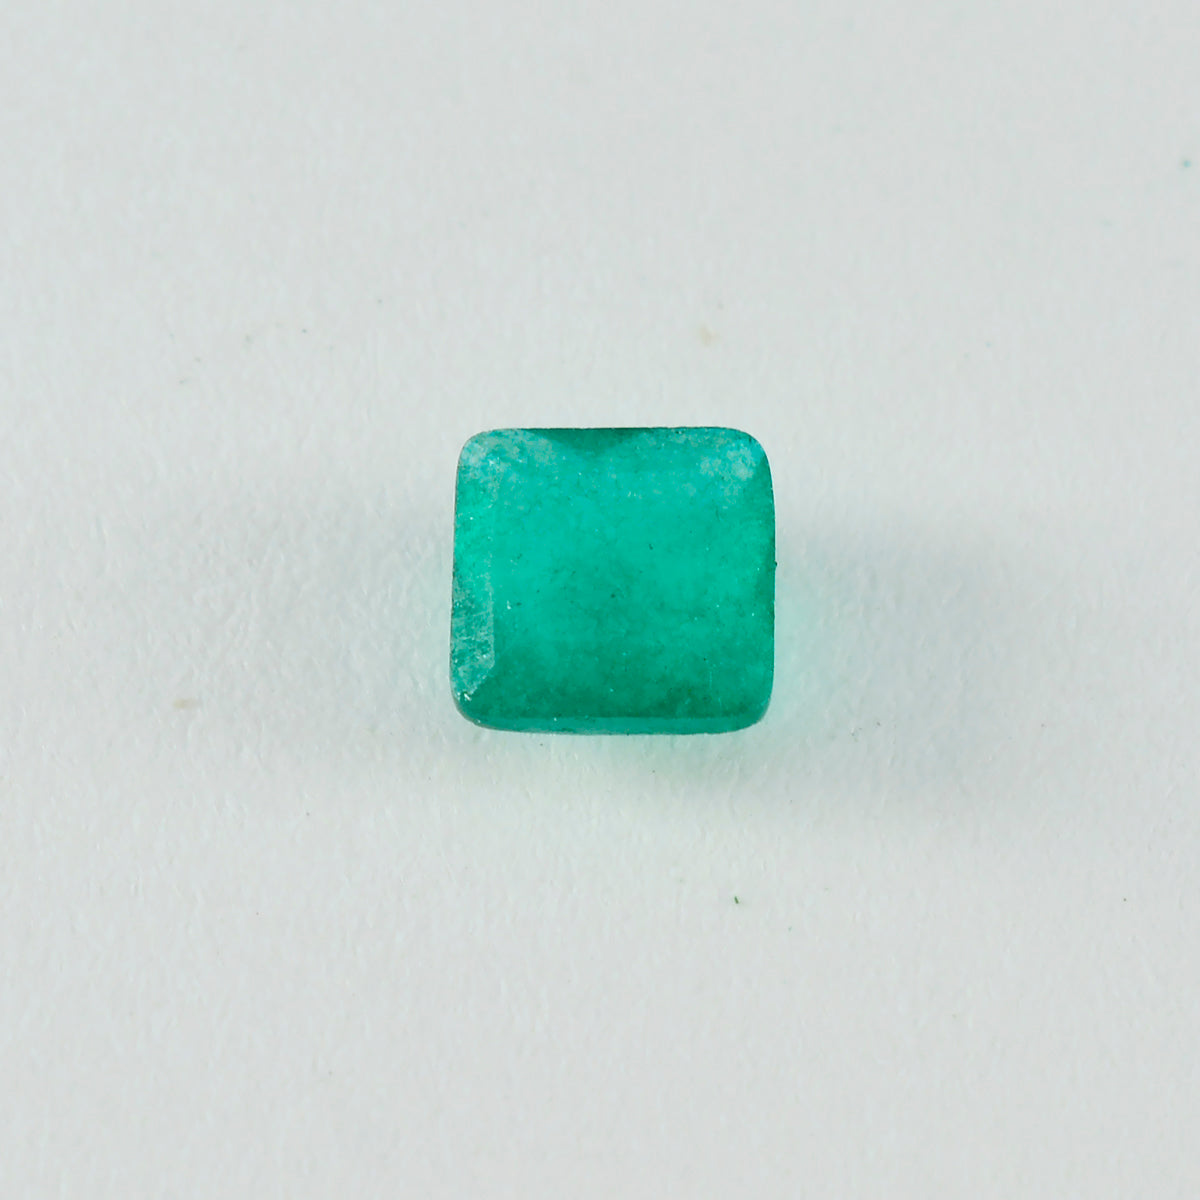 riyogems 1pc ナチュラル グリーン ジャスパー ファセット 9x9 mm 正方形の形状の美しさの品質ルース宝石